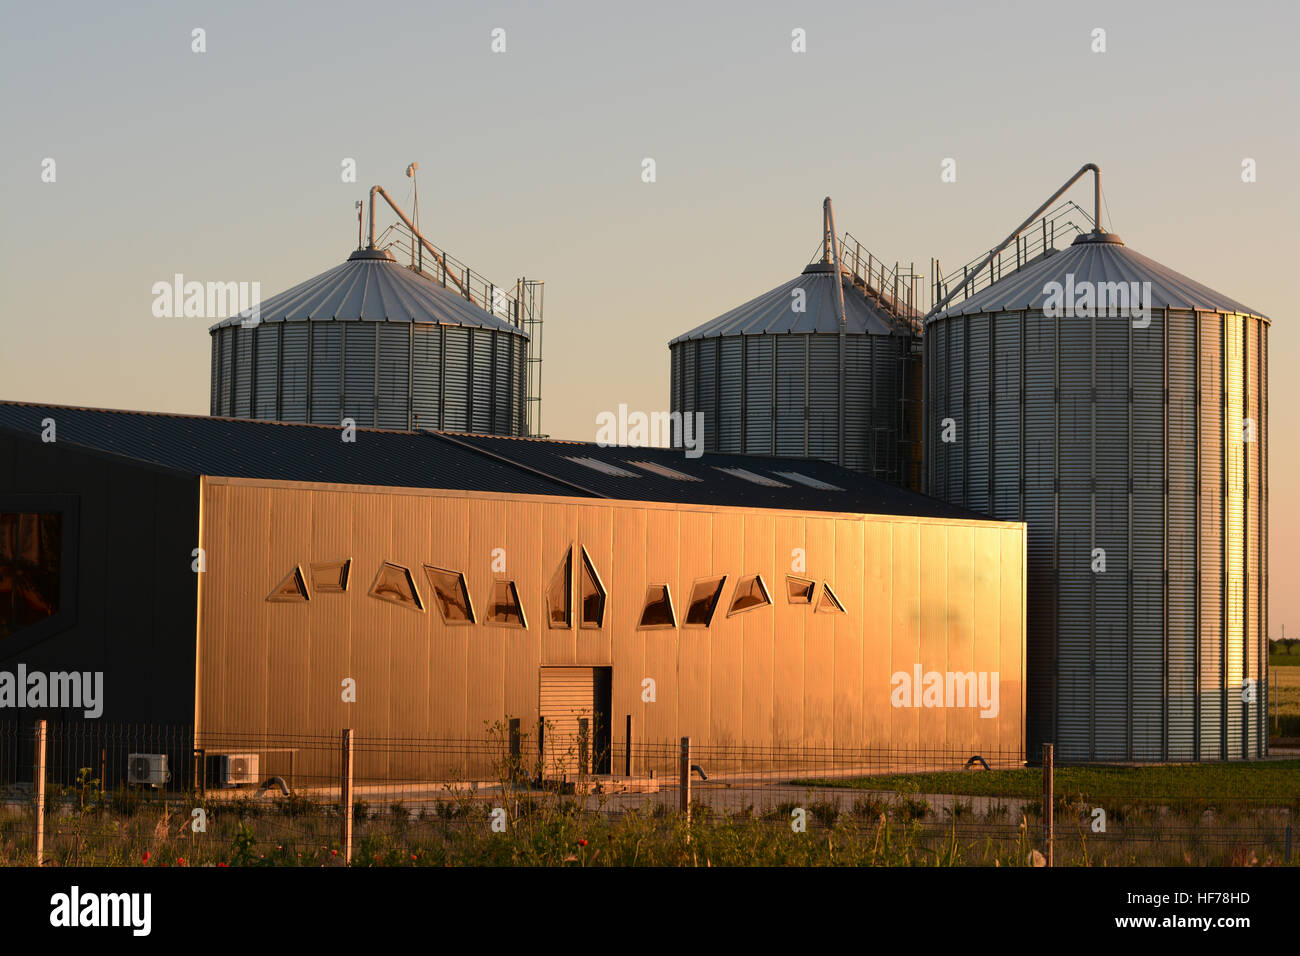 Warehouse silo in Modern farming Stock Photo